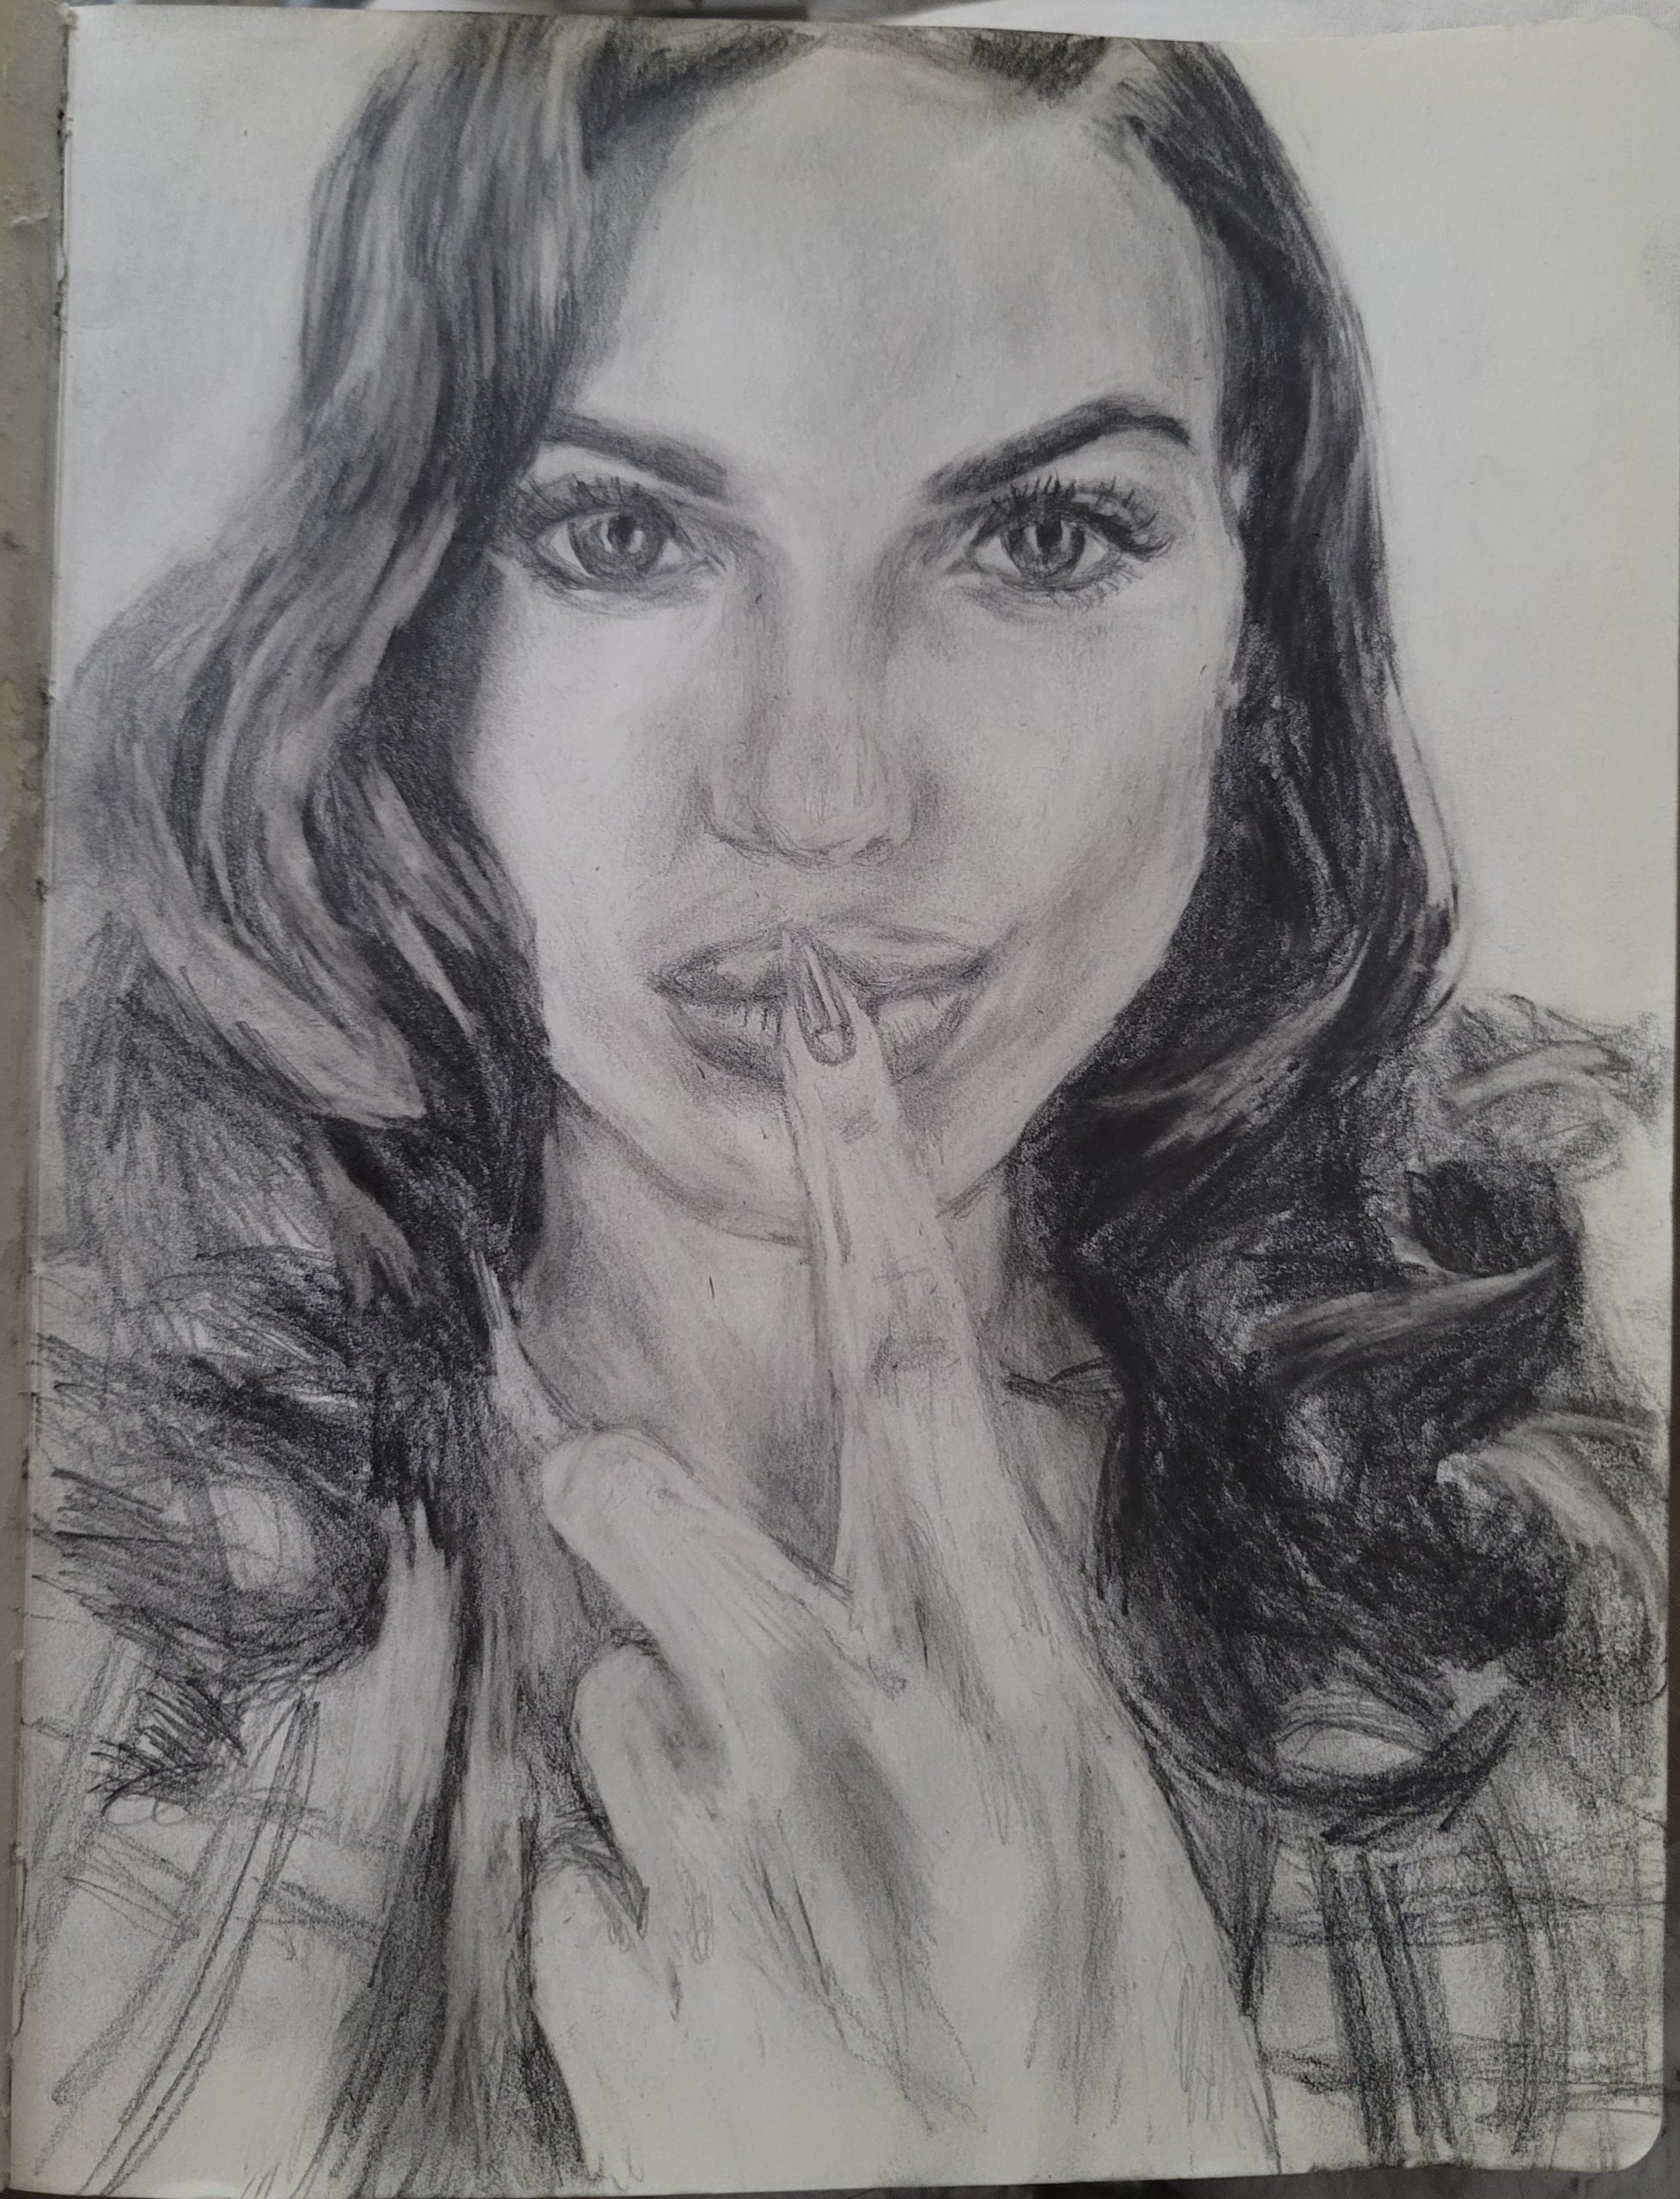 Lana in pencil